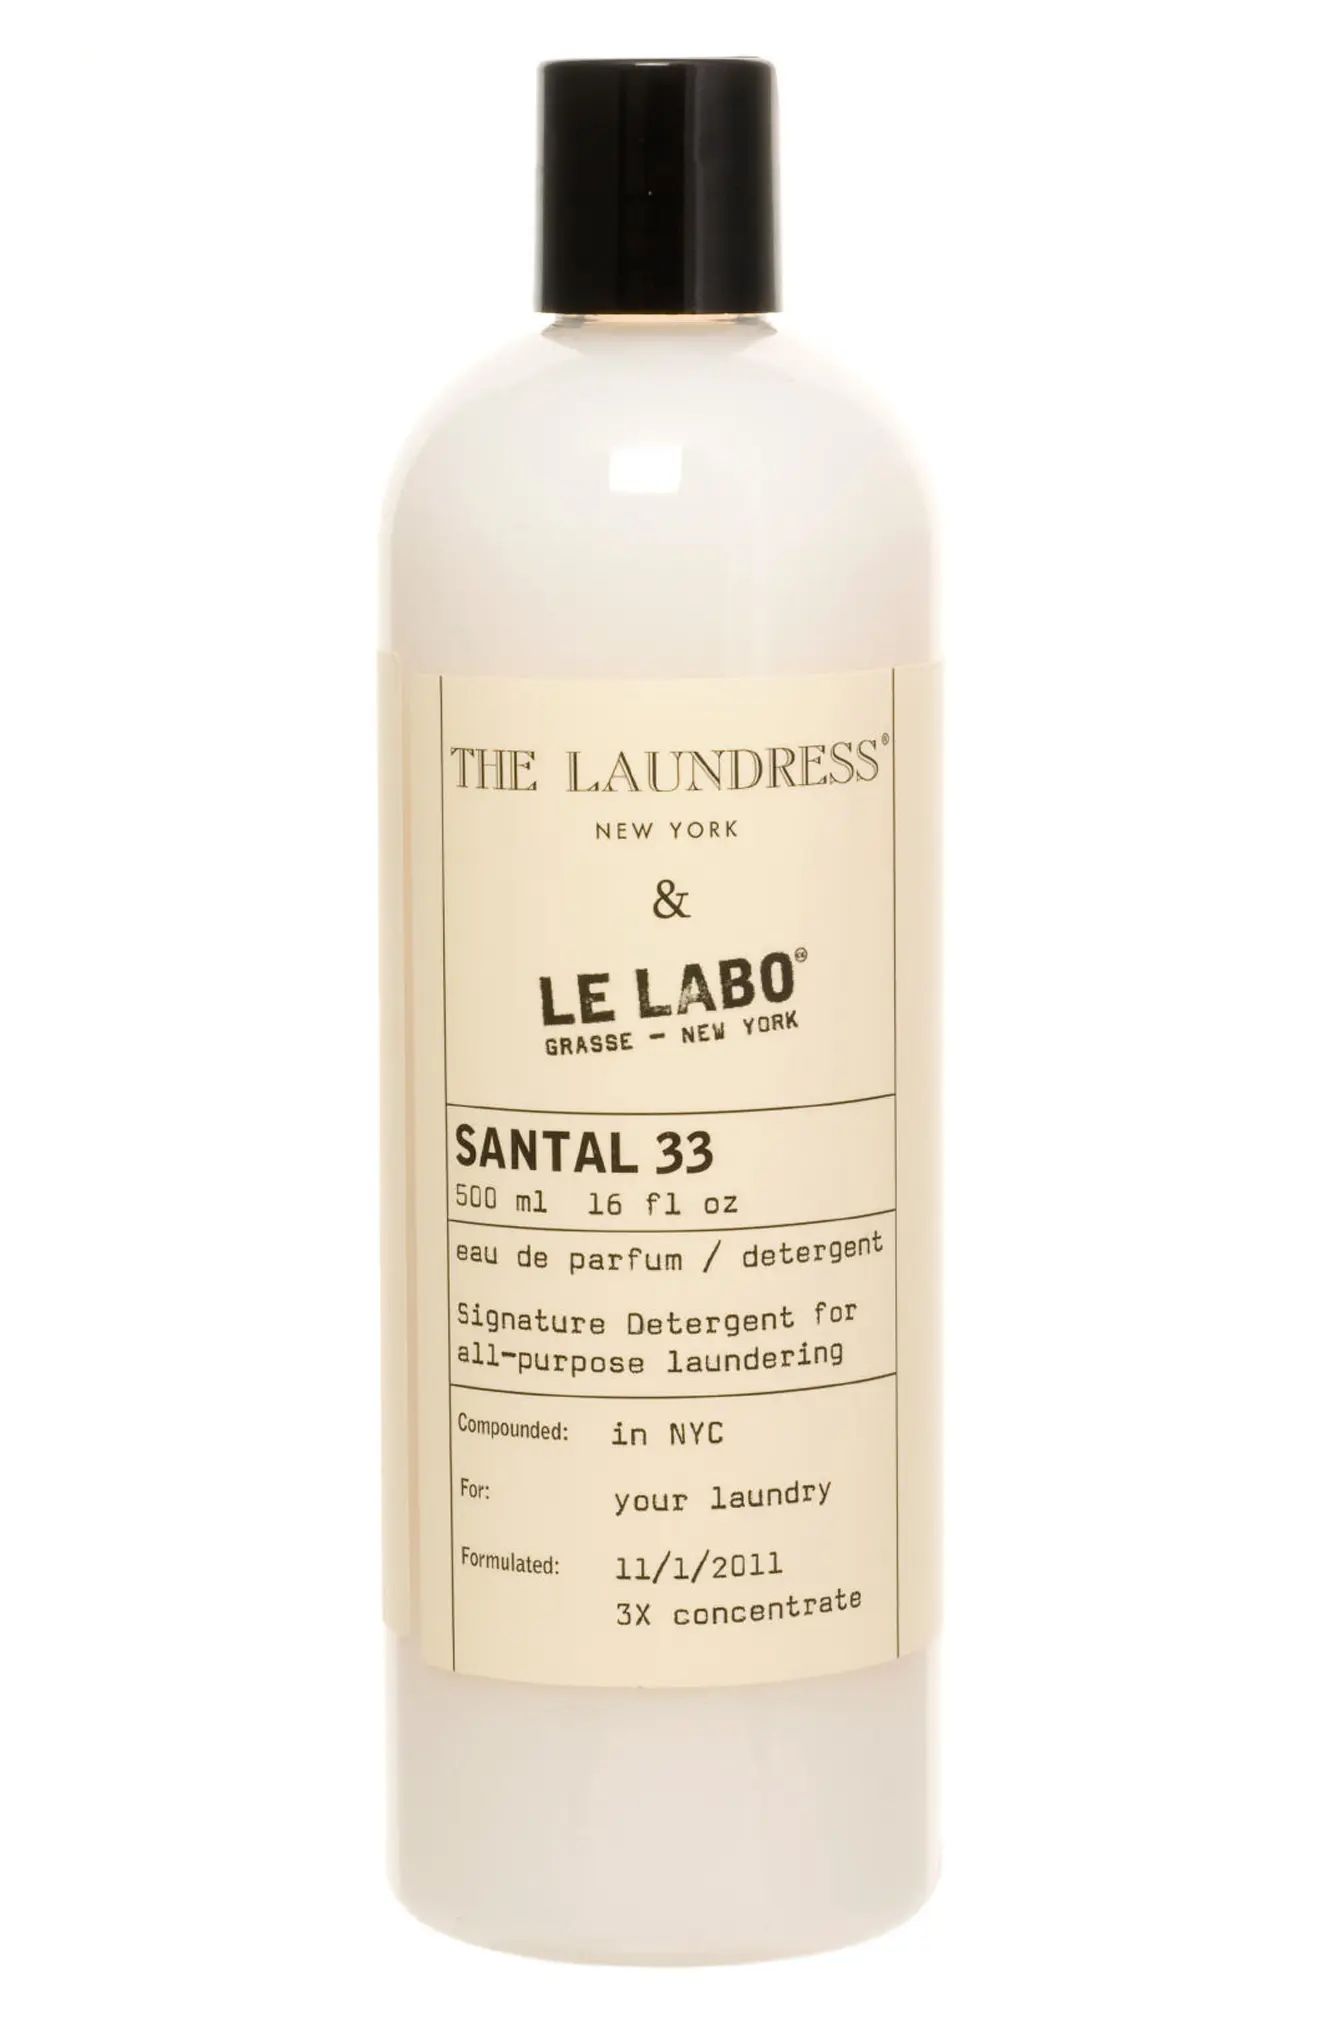 The Laundress Le Labo Santal 33 Signature Detergent at Nordstrom | Nordstrom